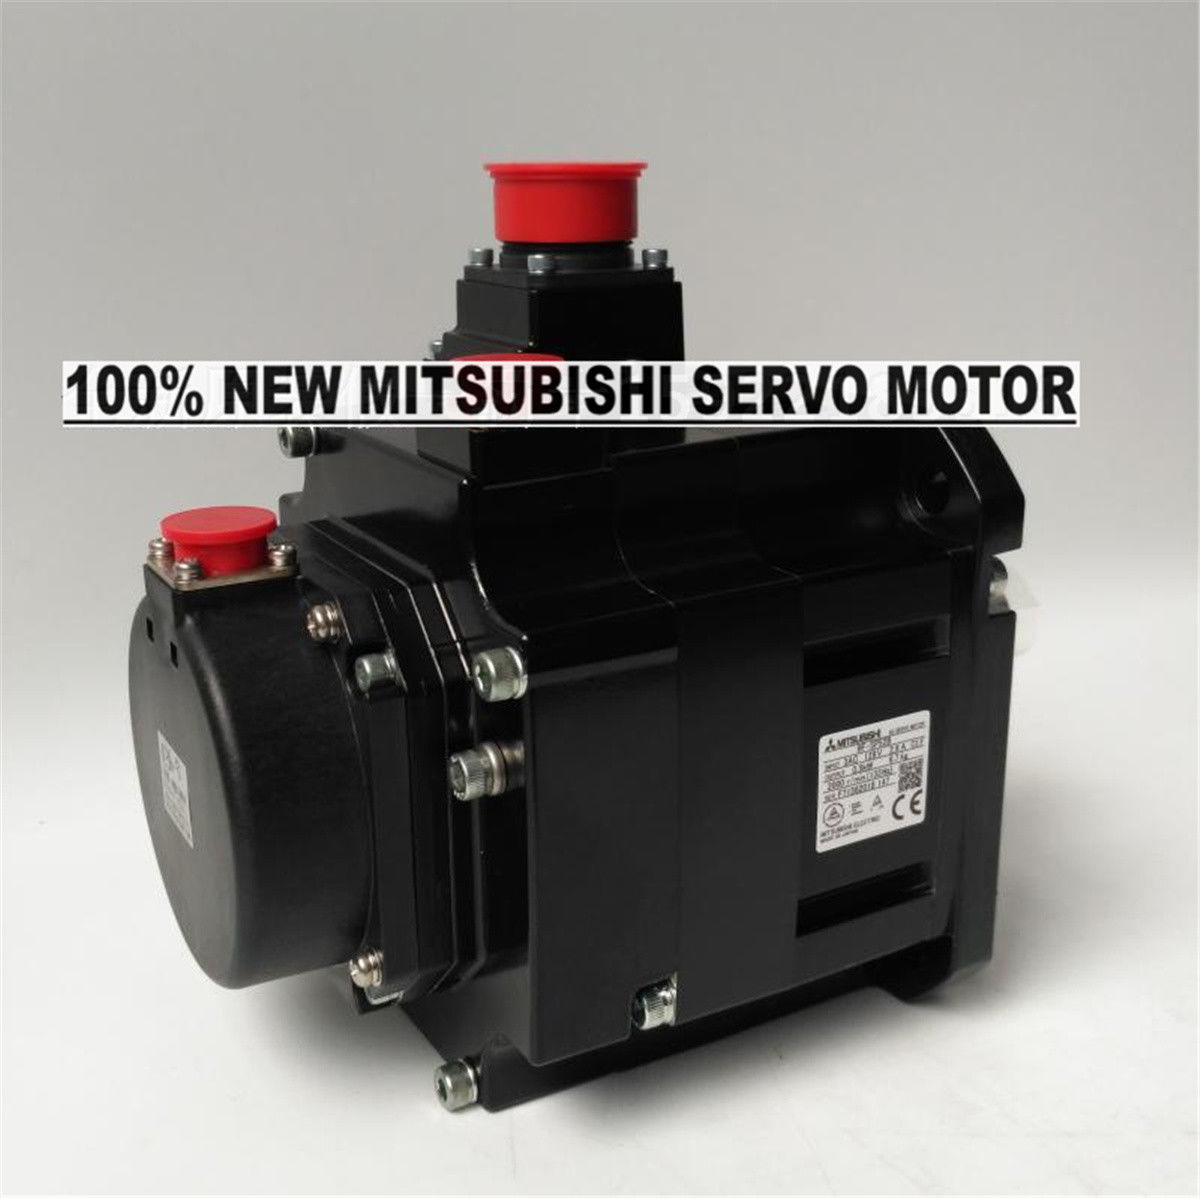 Brand NEW Mitsubishi Servo Motor HF-SP52 in box HFSP52 - Click Image to Close